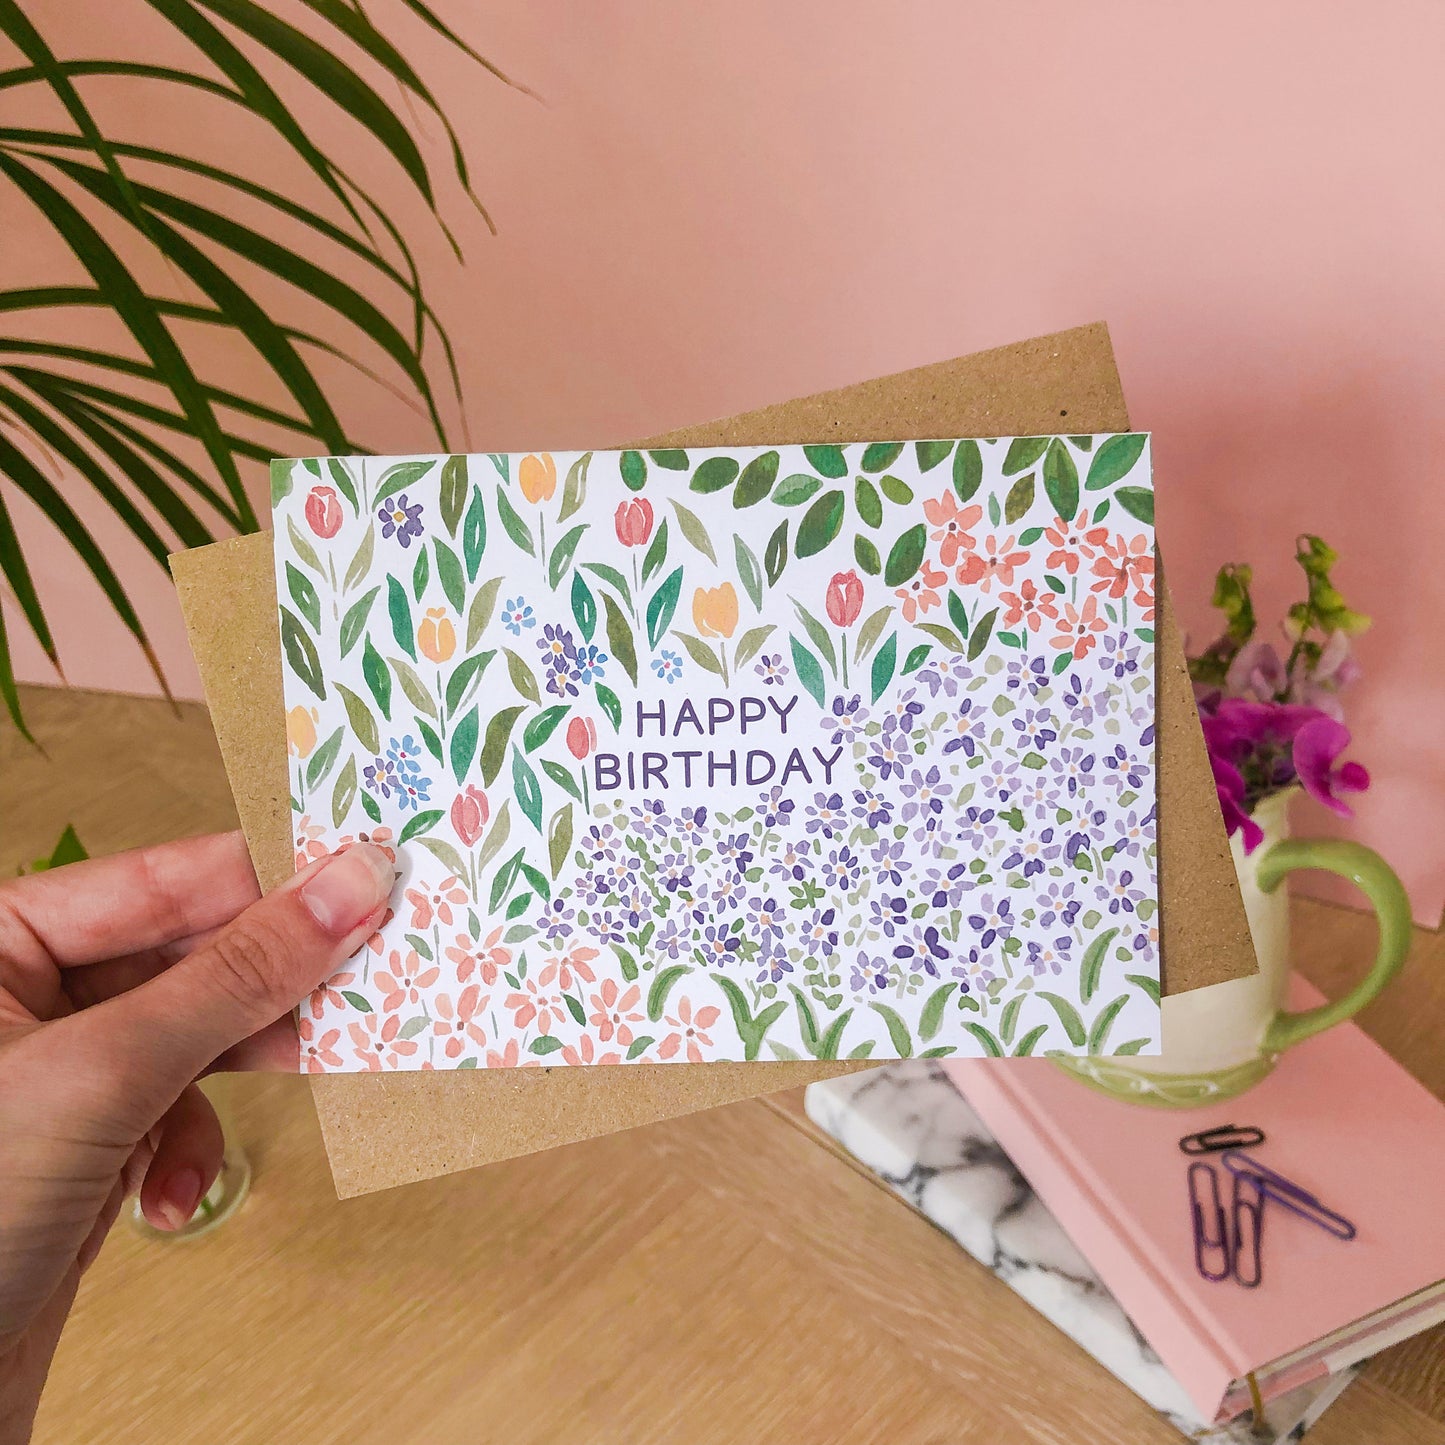 Happy Birthday Spring Flowers Card